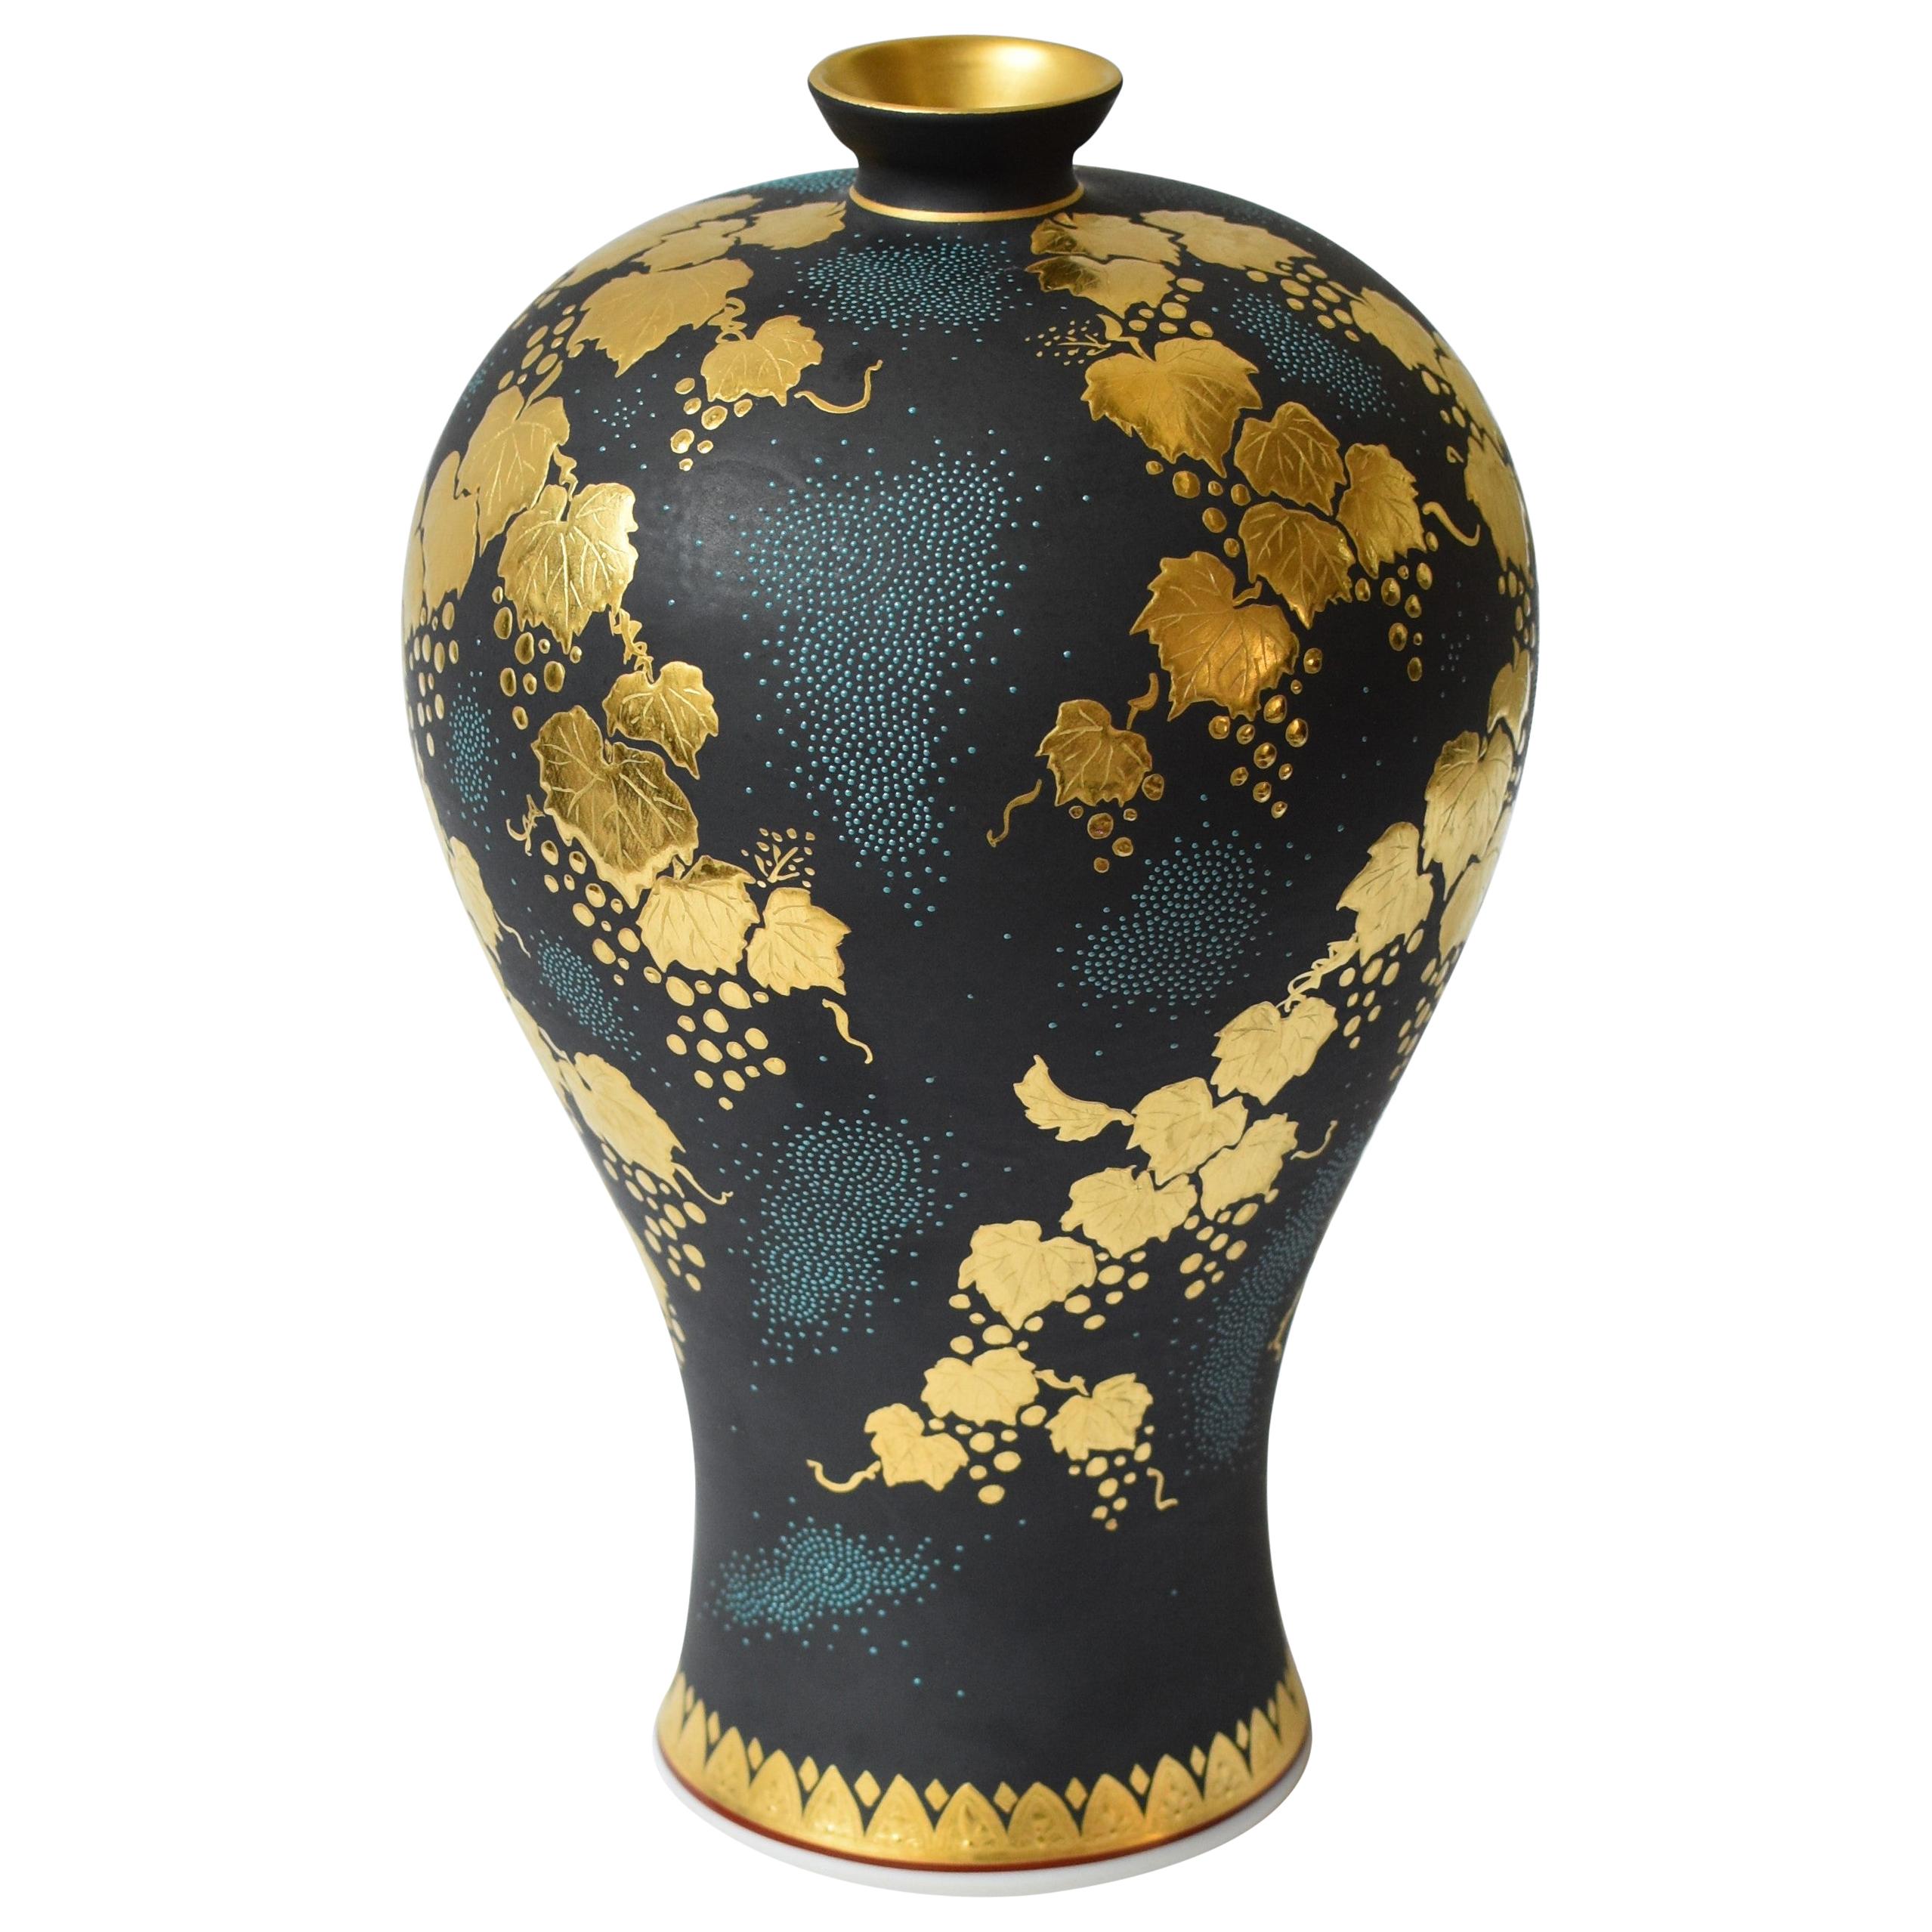 Japanese Contemporary Blue Black Gold Porcelain Vase by Master Artist, 2